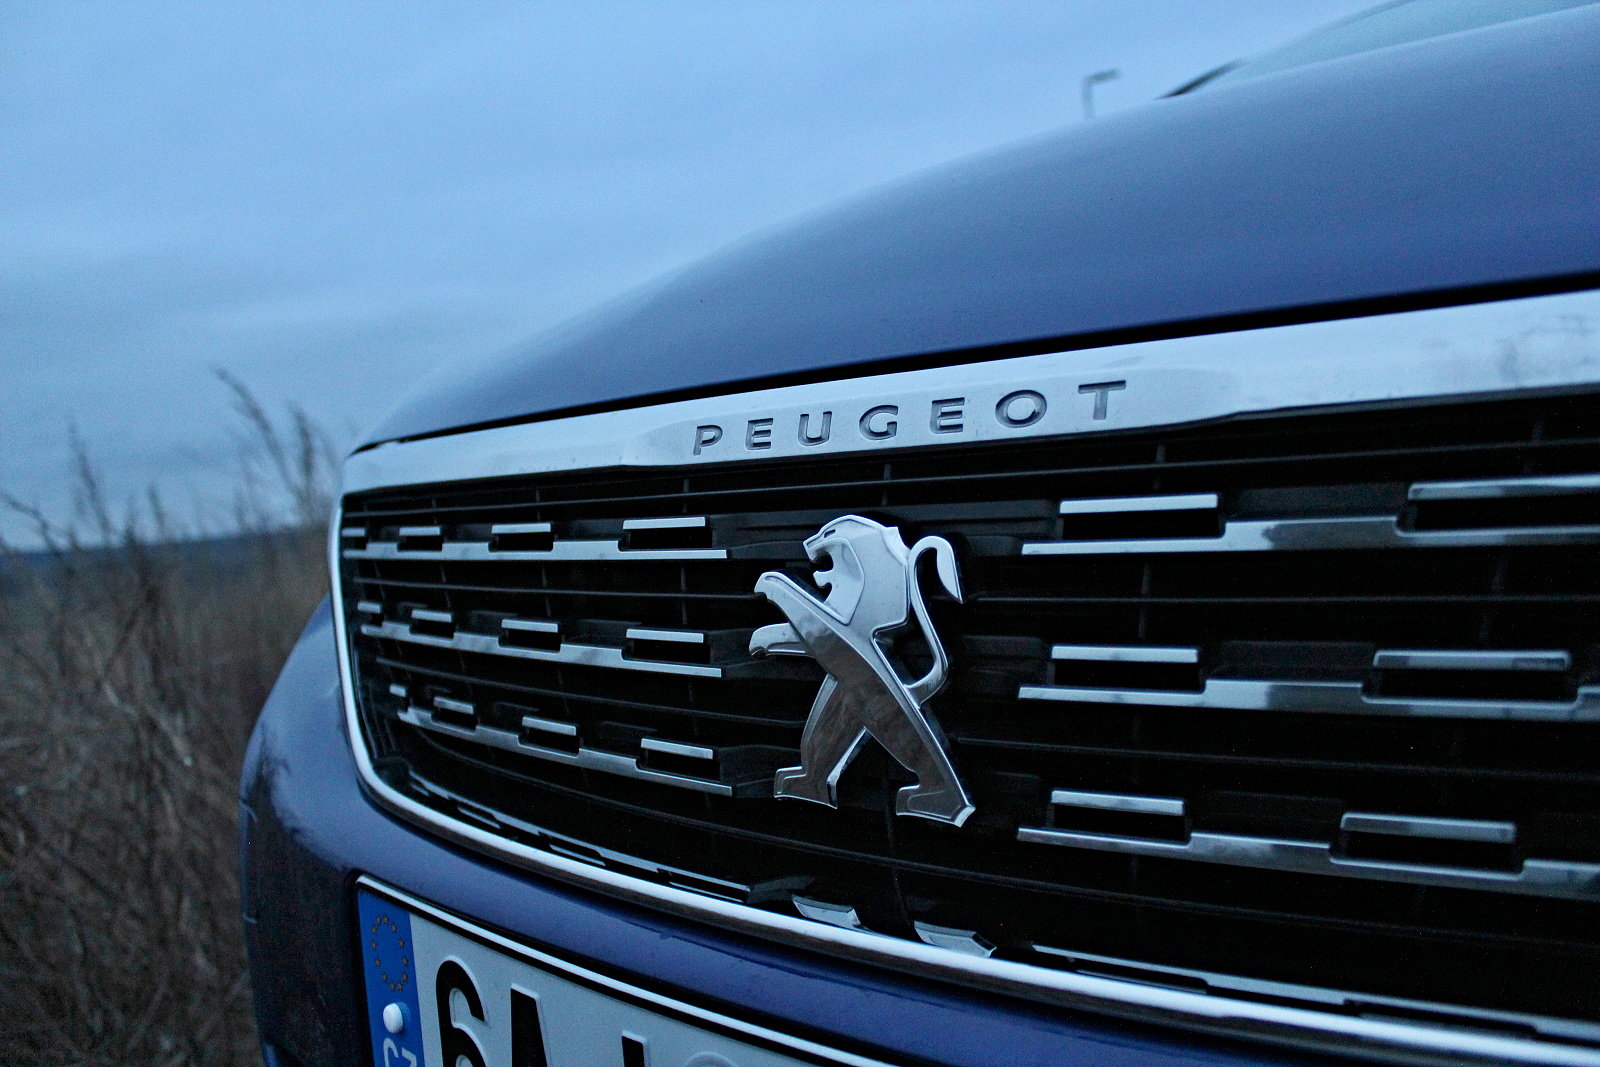 Peugeot 308 SW